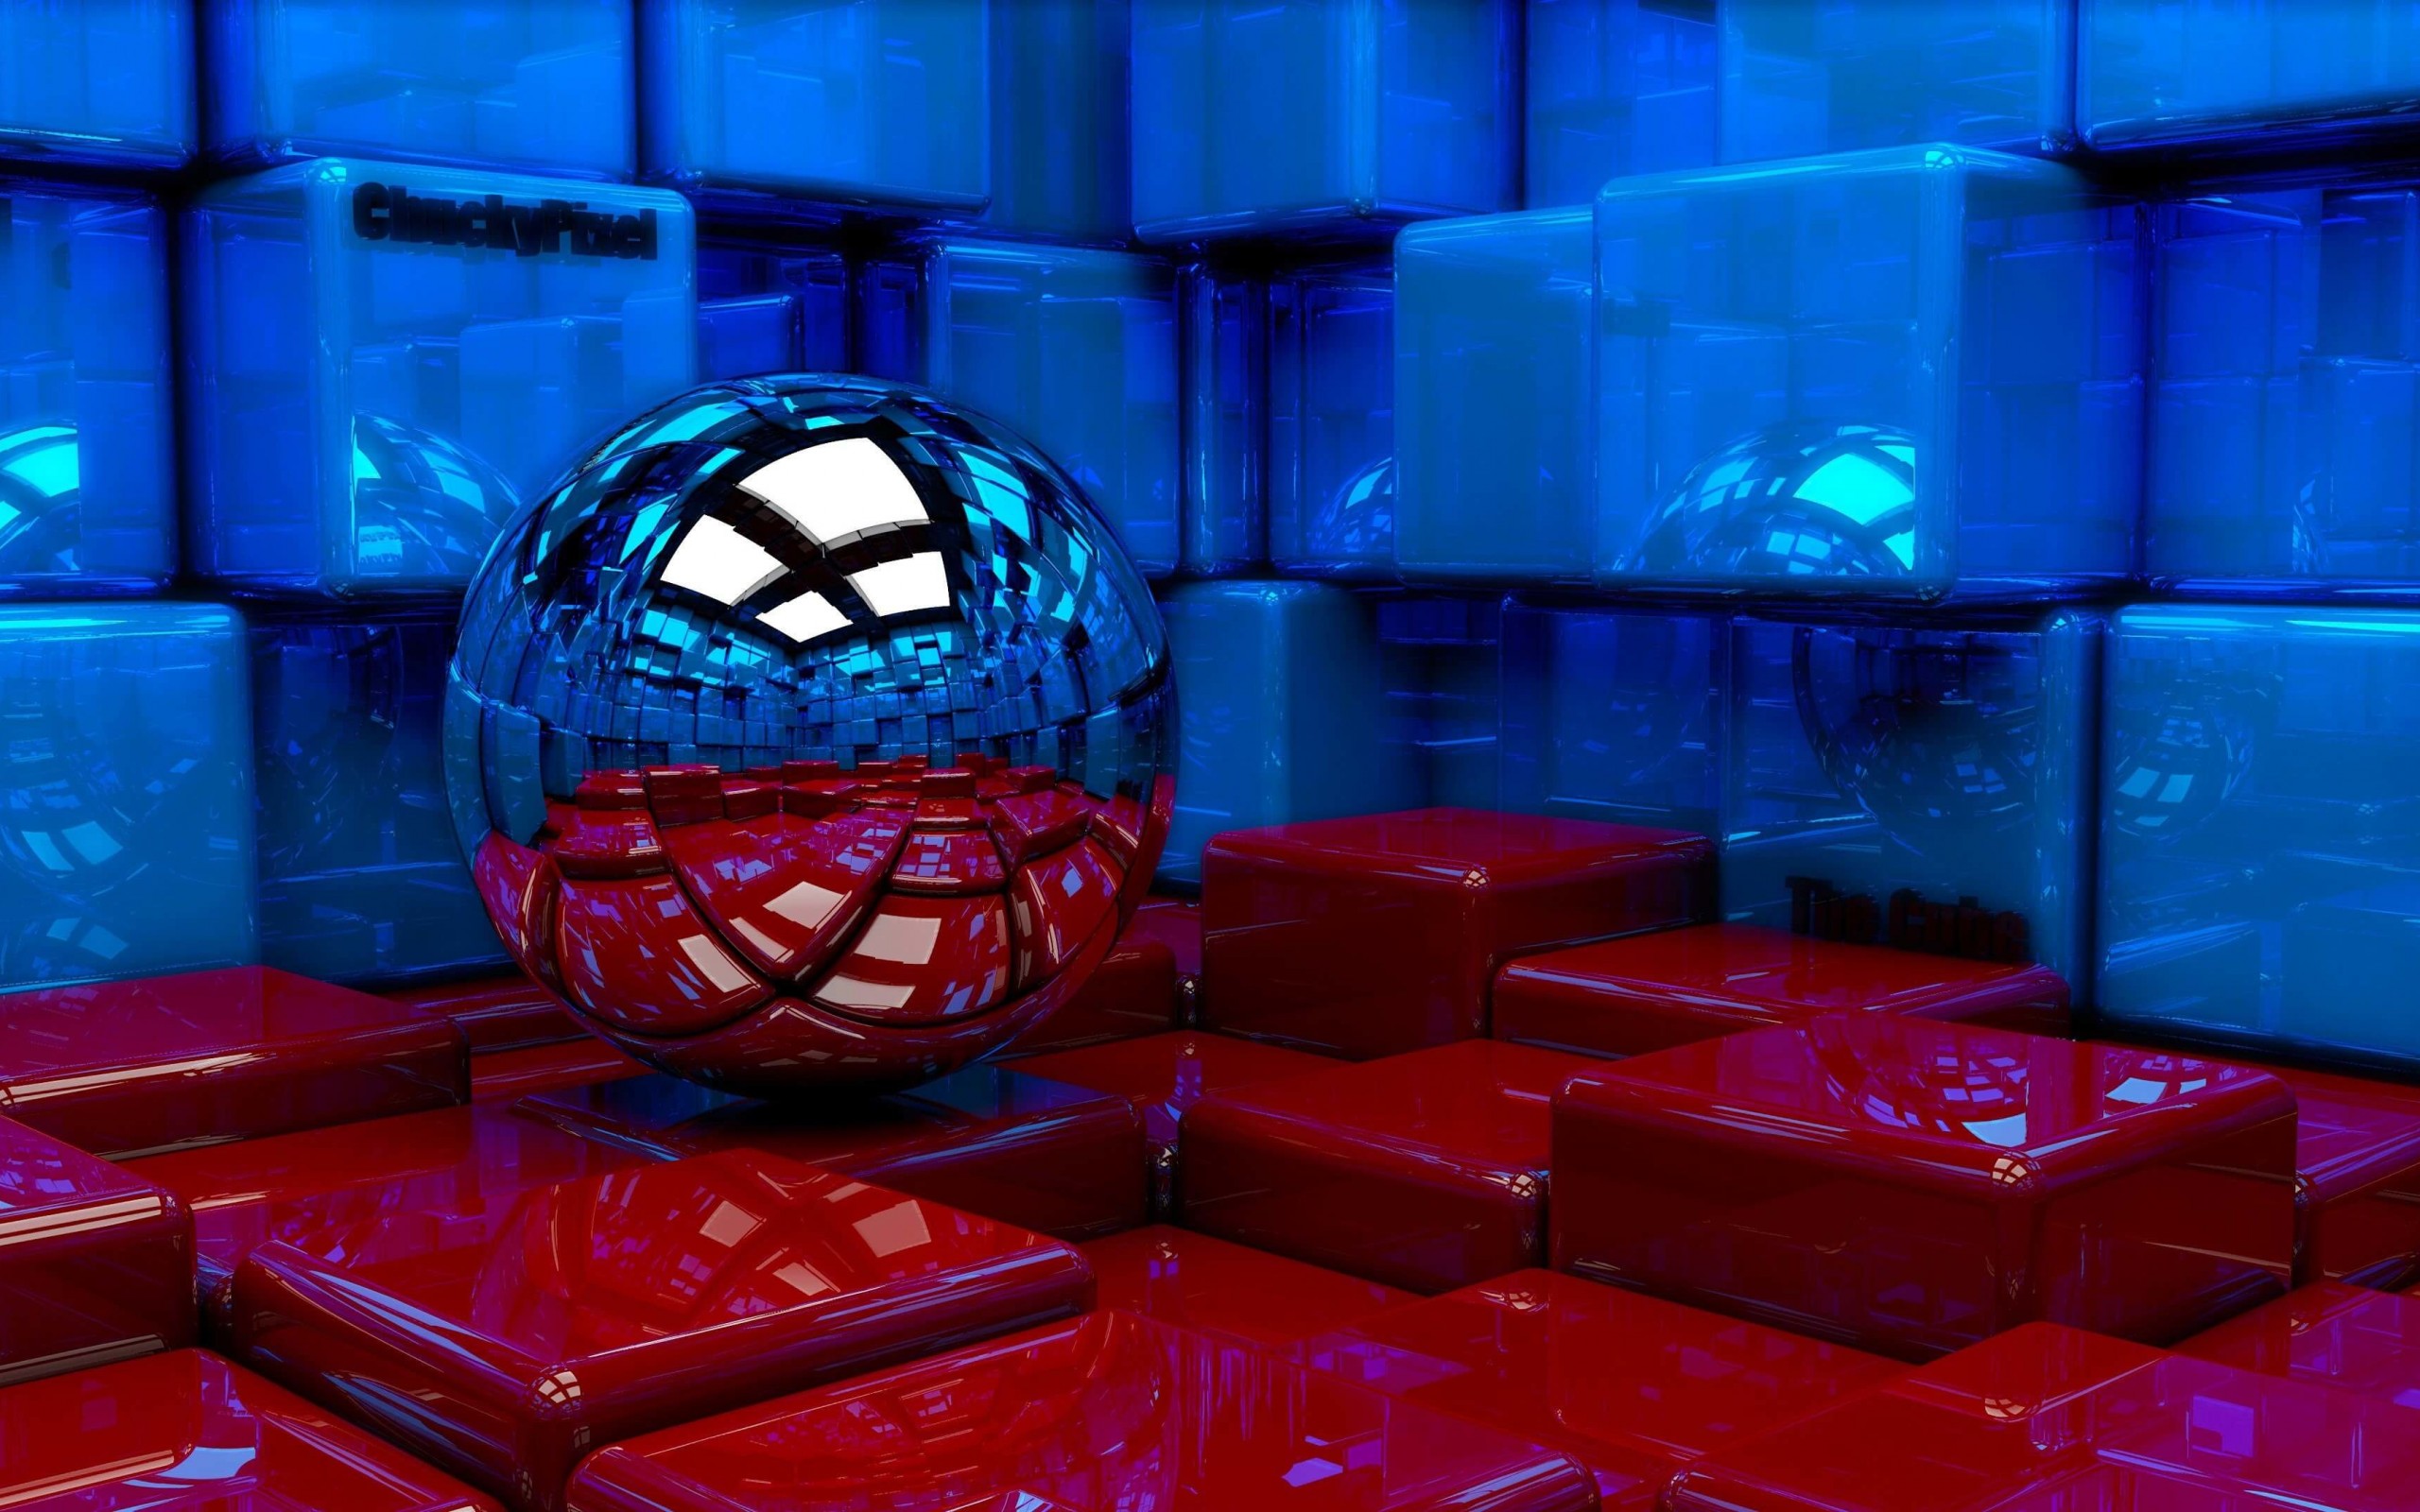 Metallic Sphere Reflecting The Cube Room Wallpaper for Desktop 2560x1600